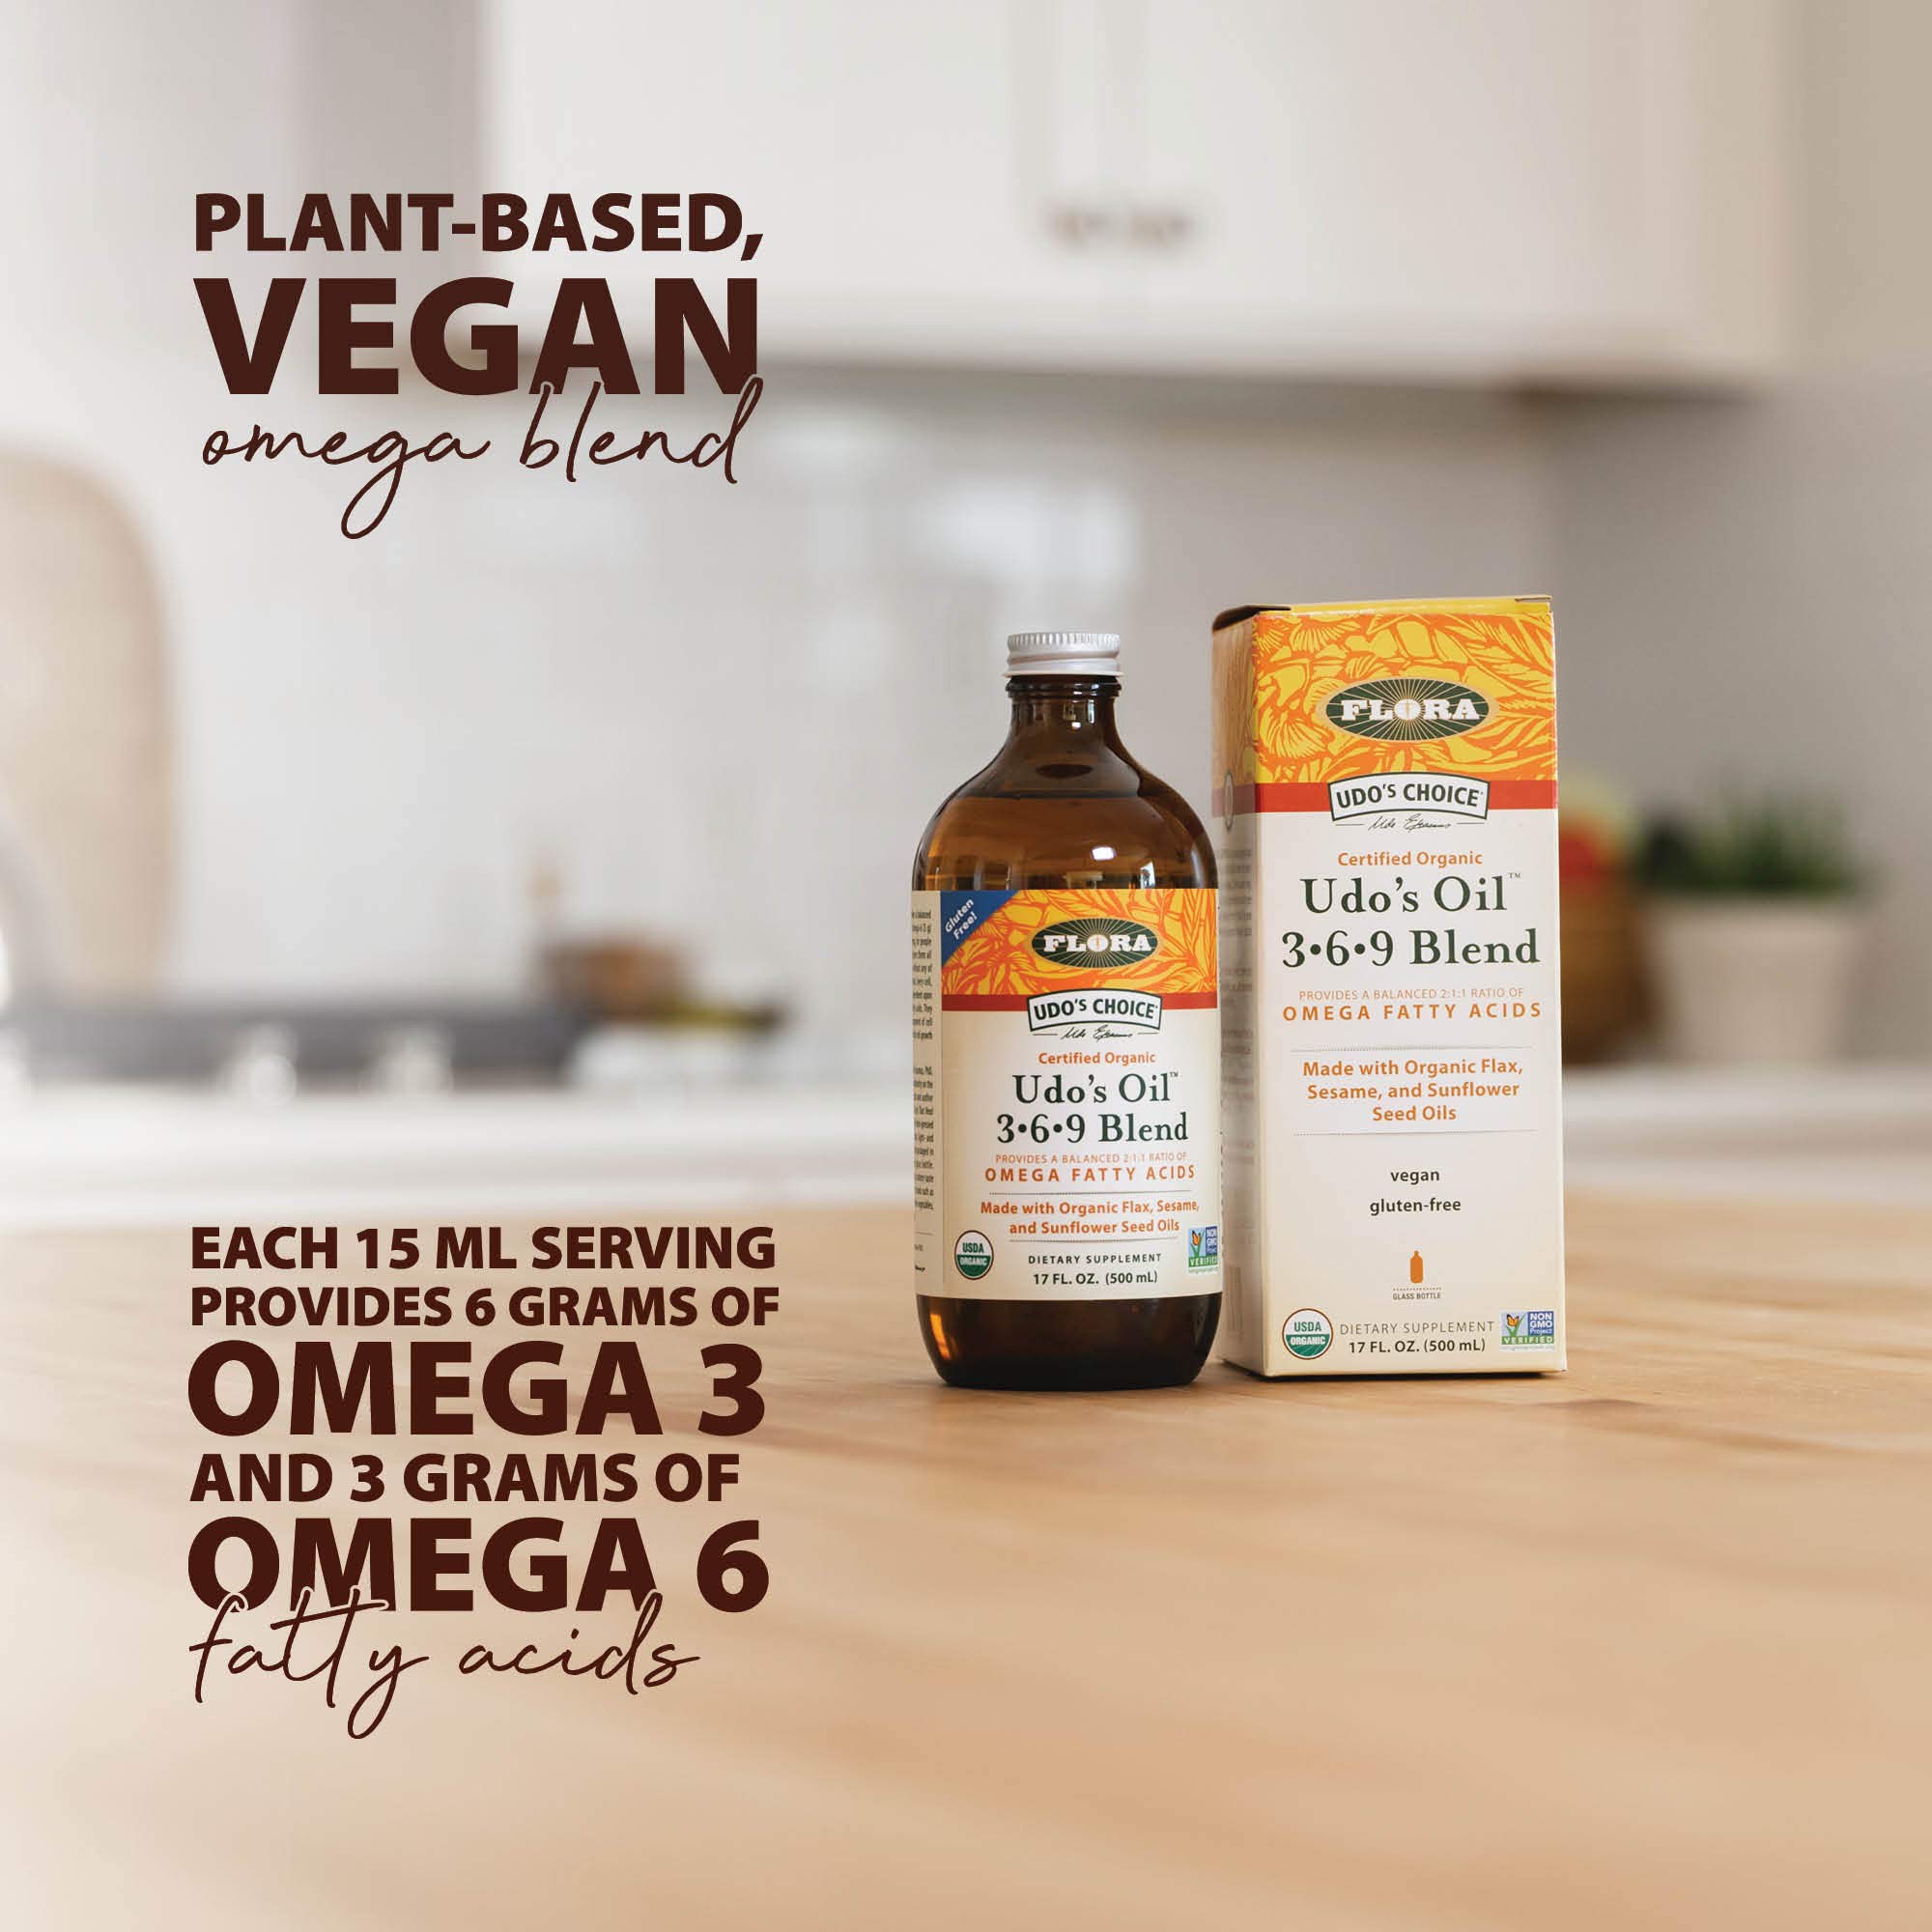 Flora - Udo's Choice Omega 369 Oil Blend, Made with Organic Flax, Sesame & Sunflower Seed Oils, Plant-Based Vegan Omega Fatty Acids, Based on Ideal 2:1:1 Ratio, 8.5-fl. oz. Glass Bottle